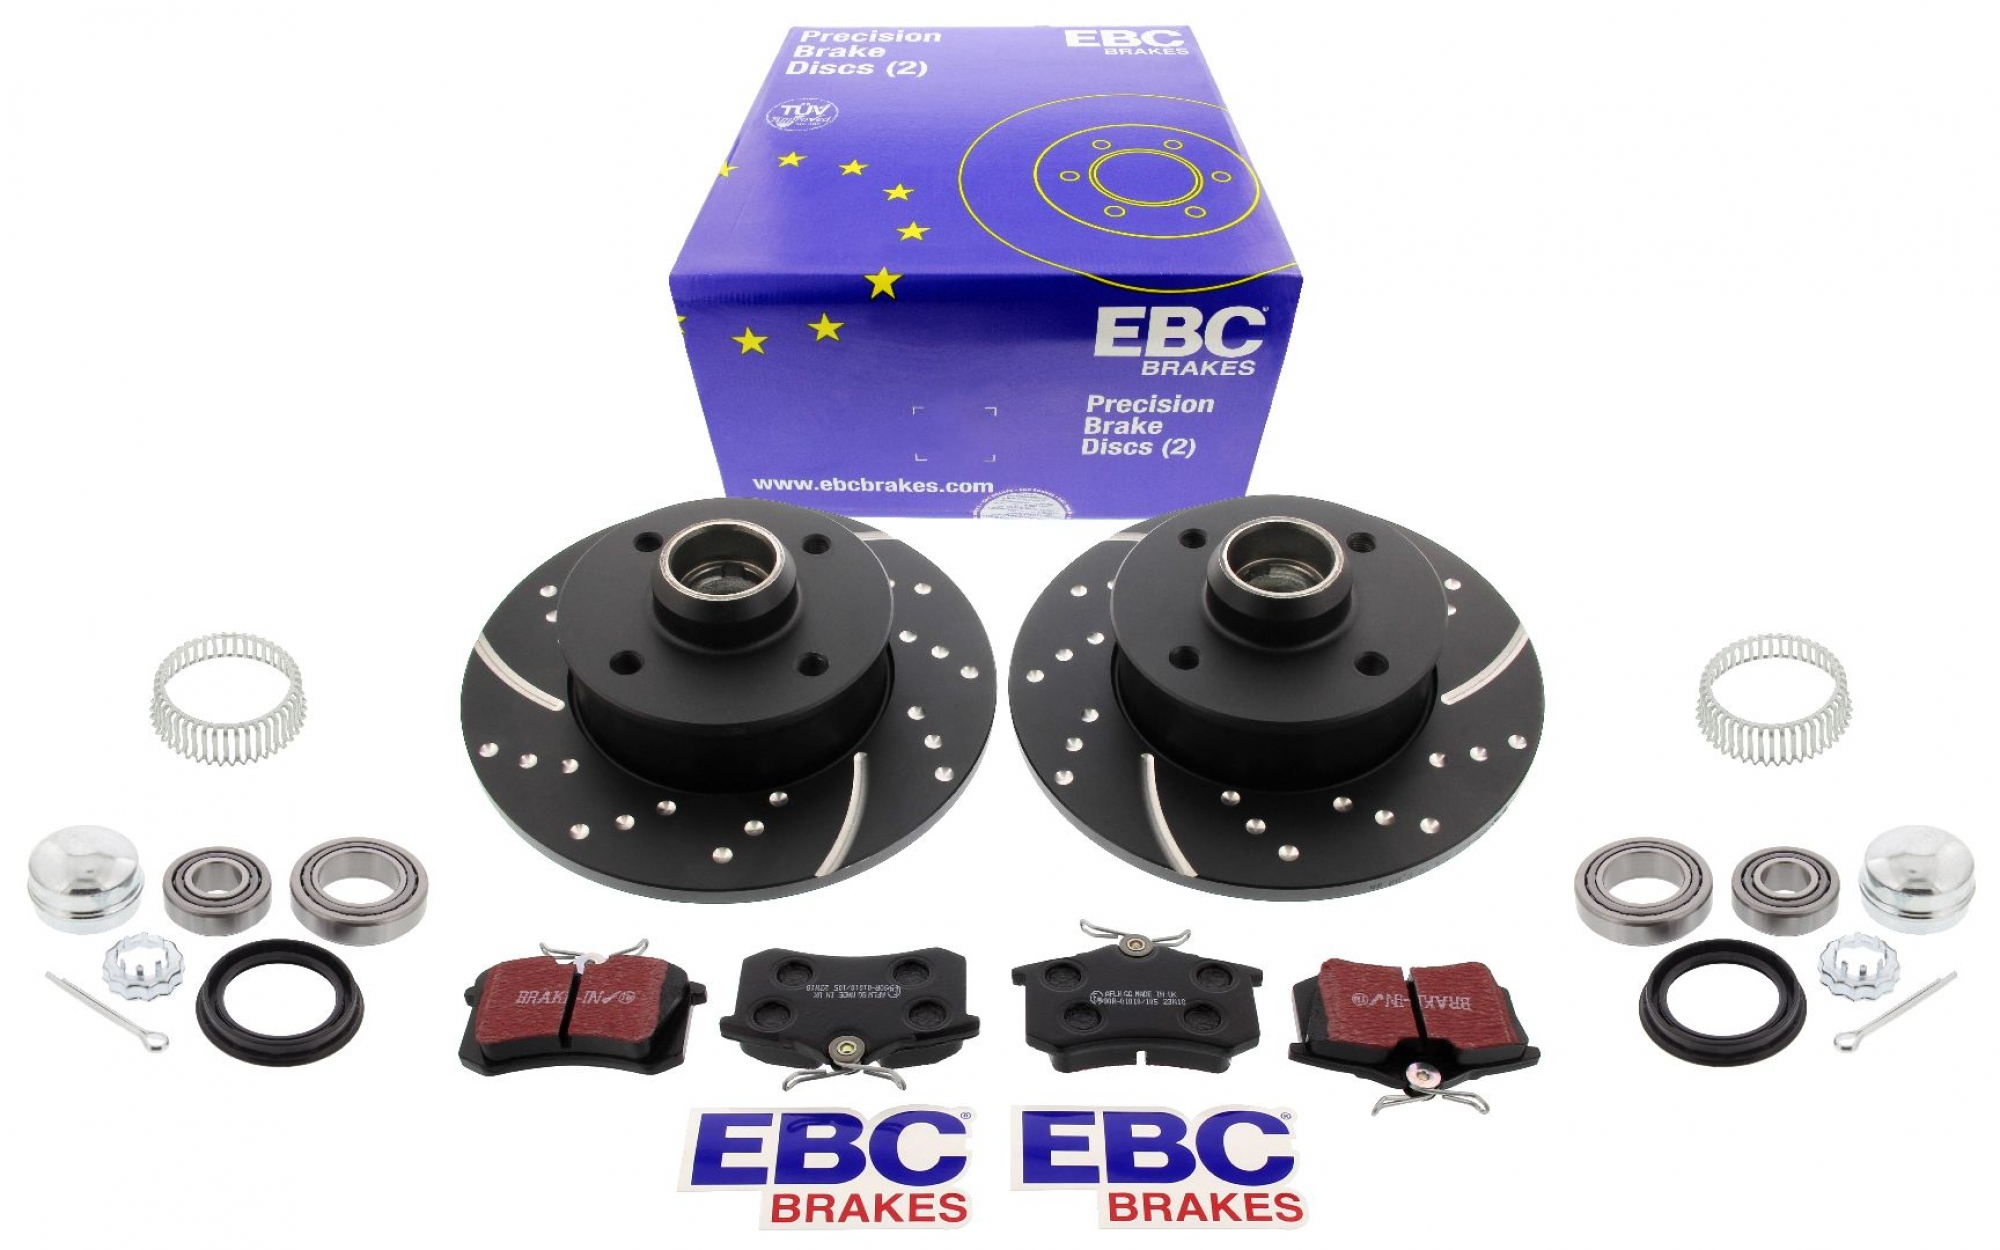 EBC-Bremsensatz, Turbo Groove Disc Black + Bremsbeläge, Blackstuff, Achssatz, HA, VW Golf 2/3, Corrado, G60-Bremse, inkl. Radlager + ABS Ring